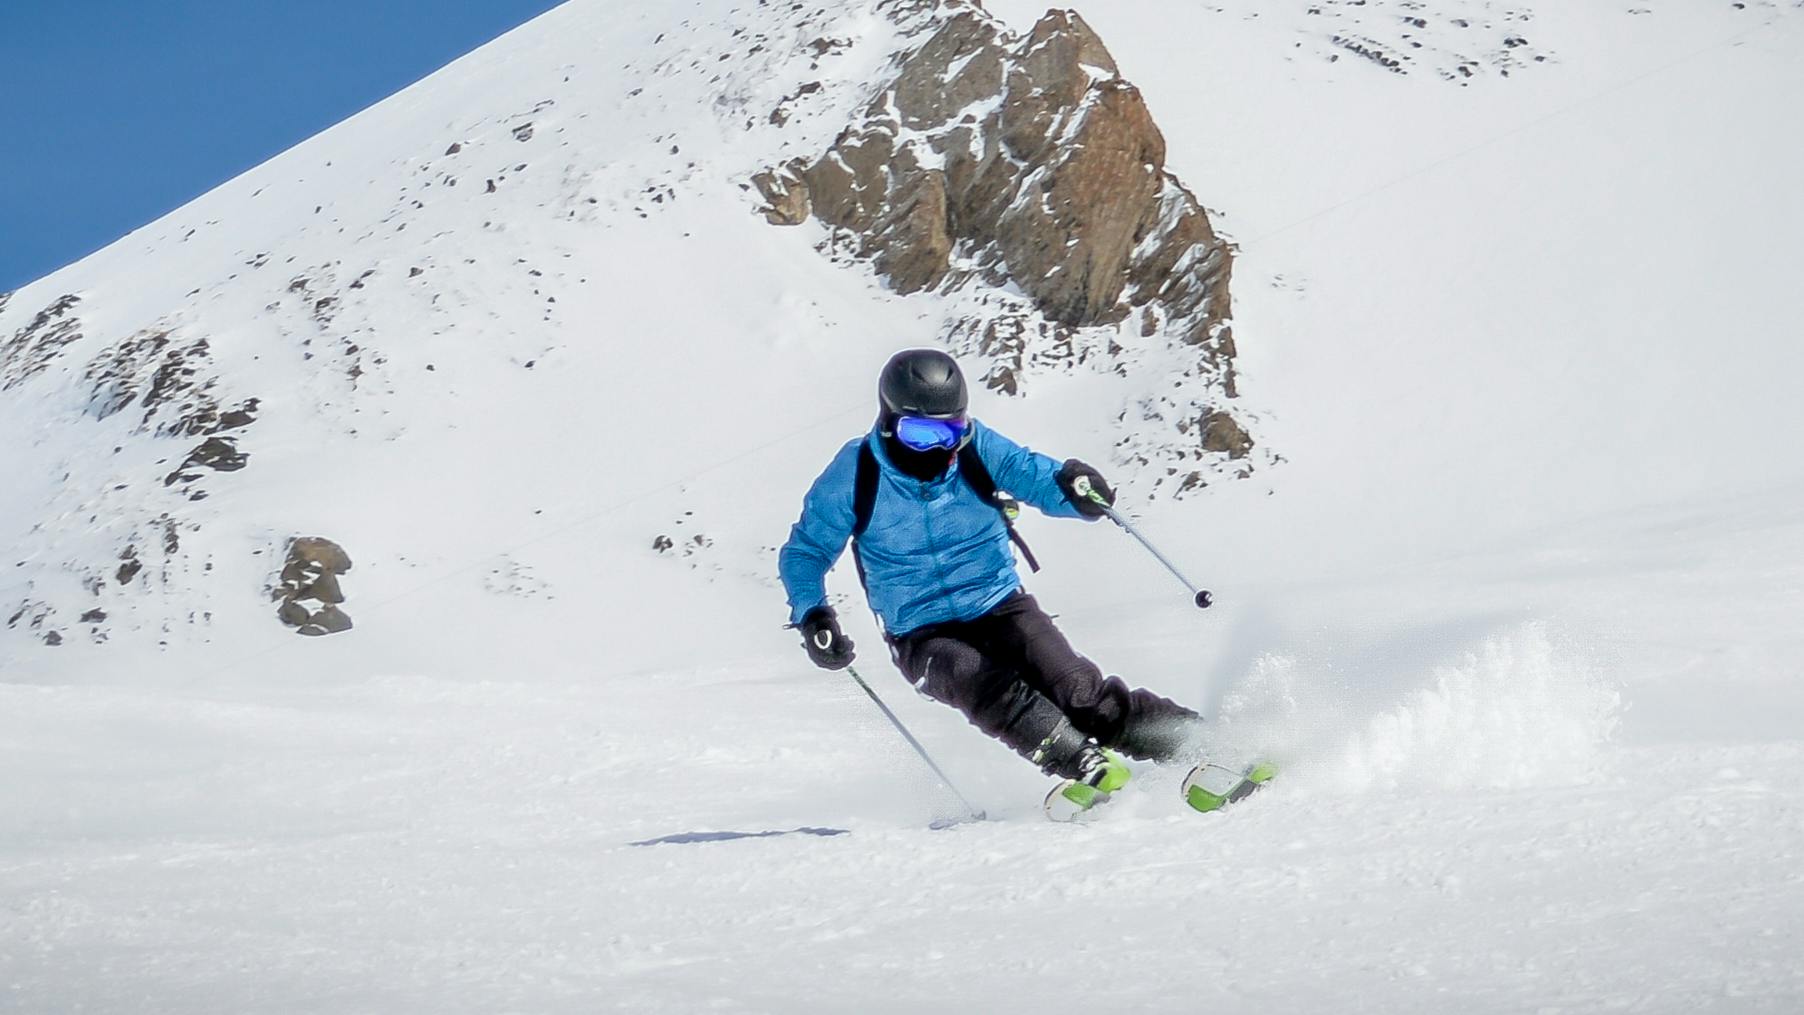 A skier carves a turn.